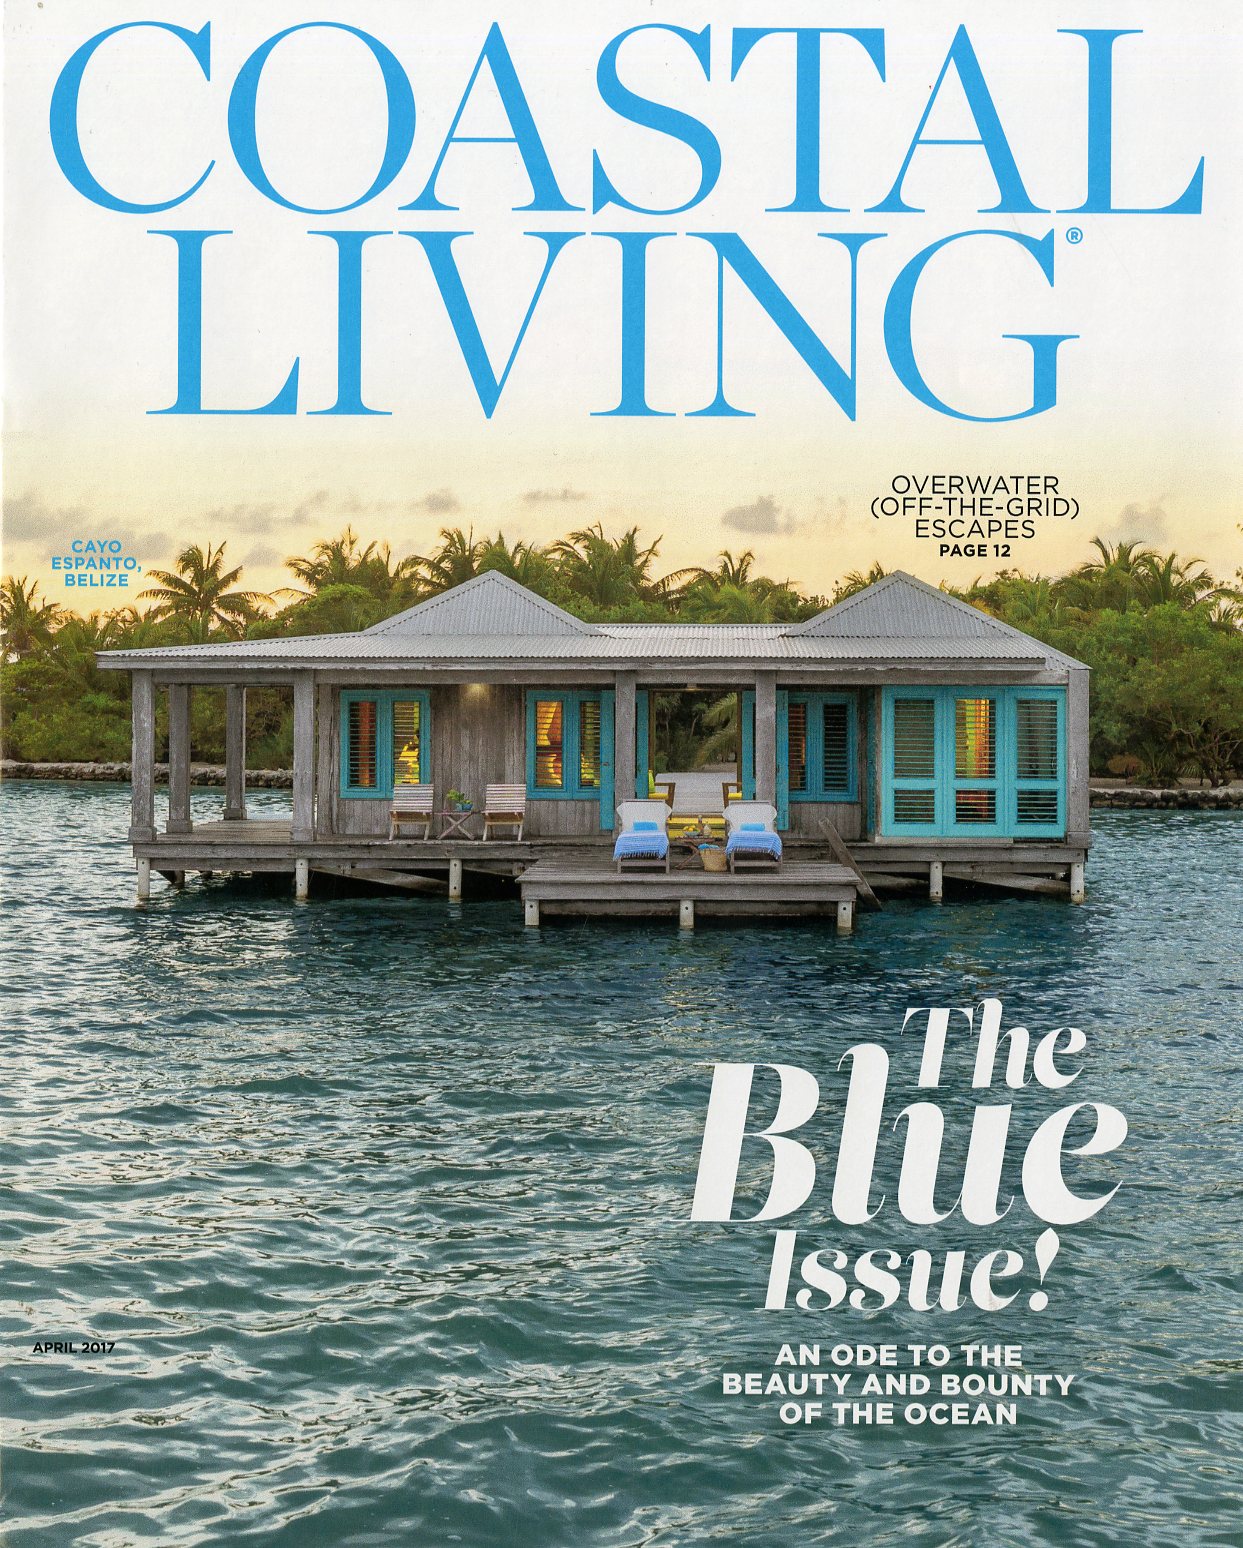 Living Coasts. Living magazine